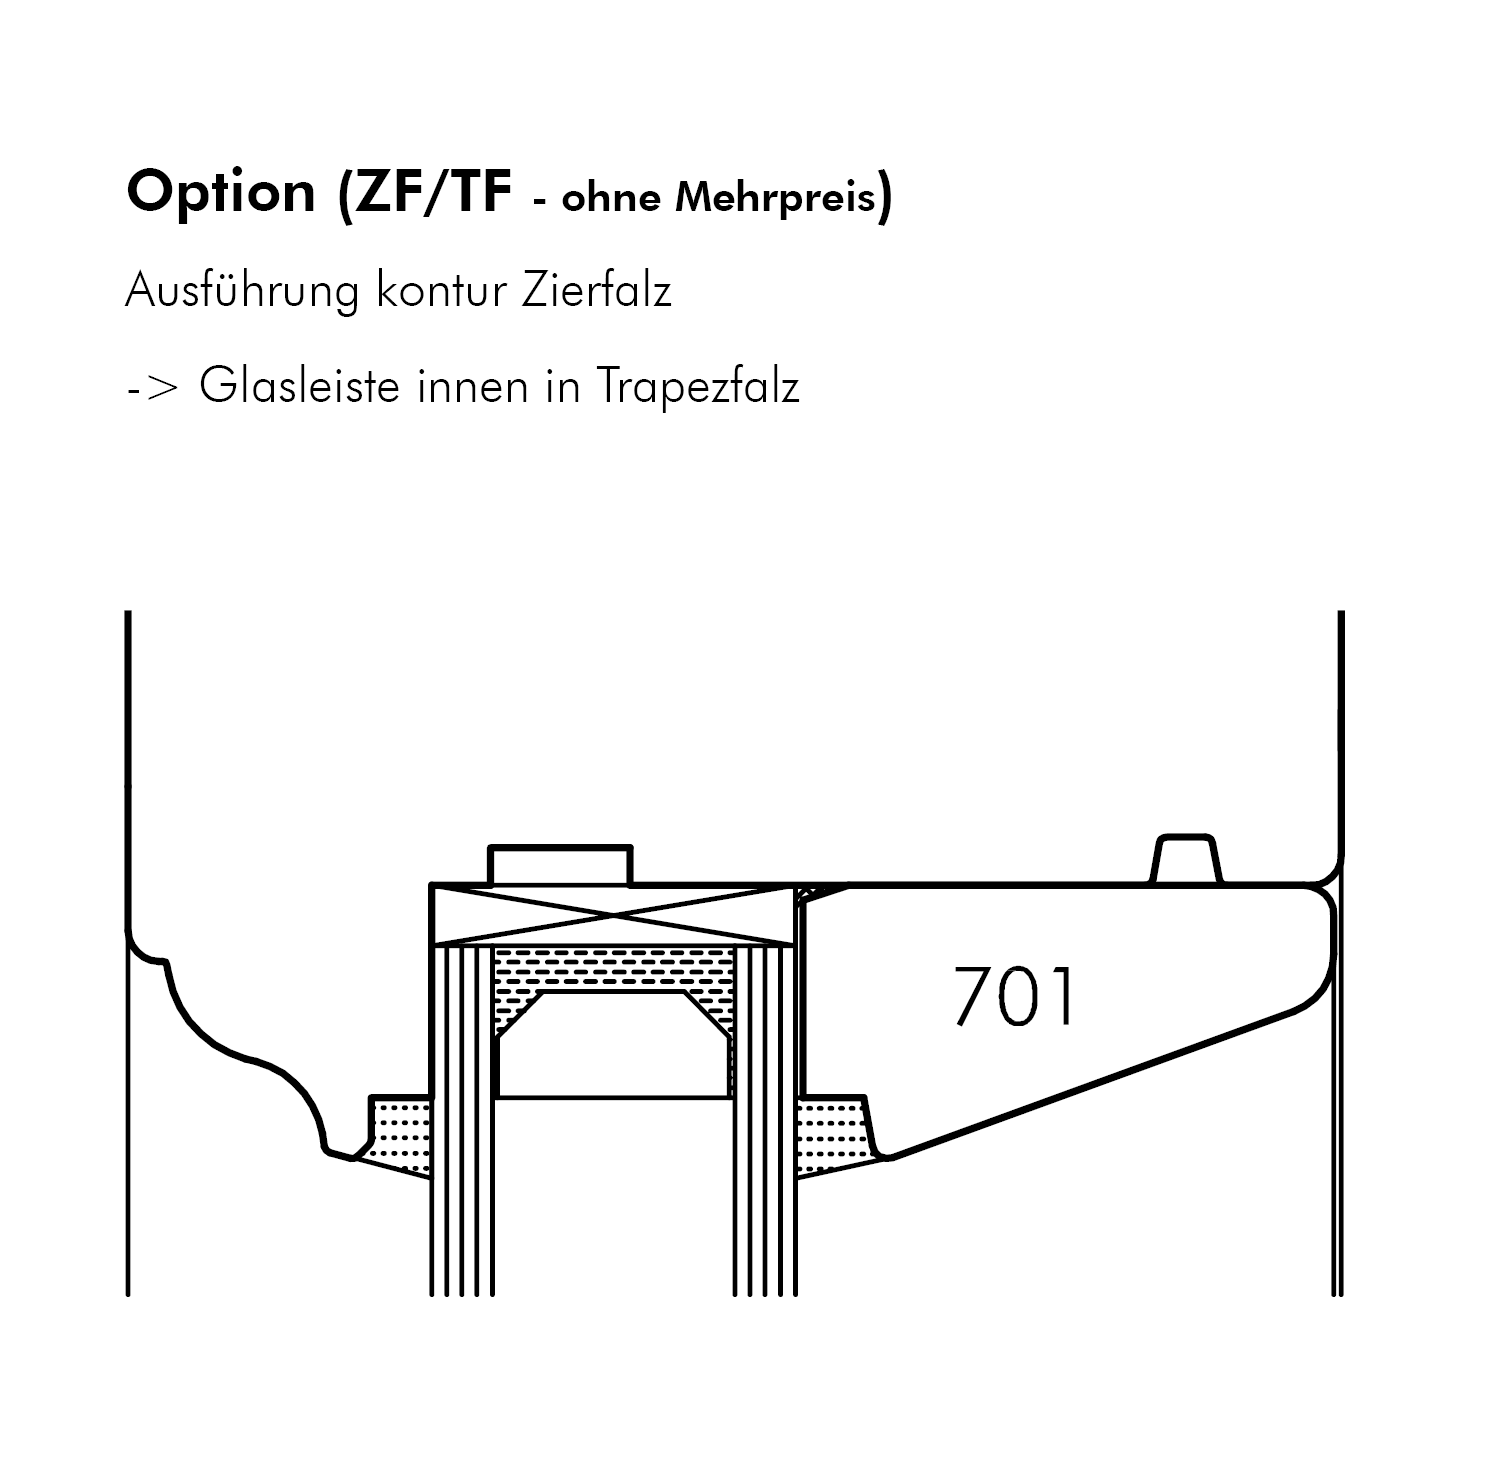 Option (ZF/TF - ohne Mehrpreis)